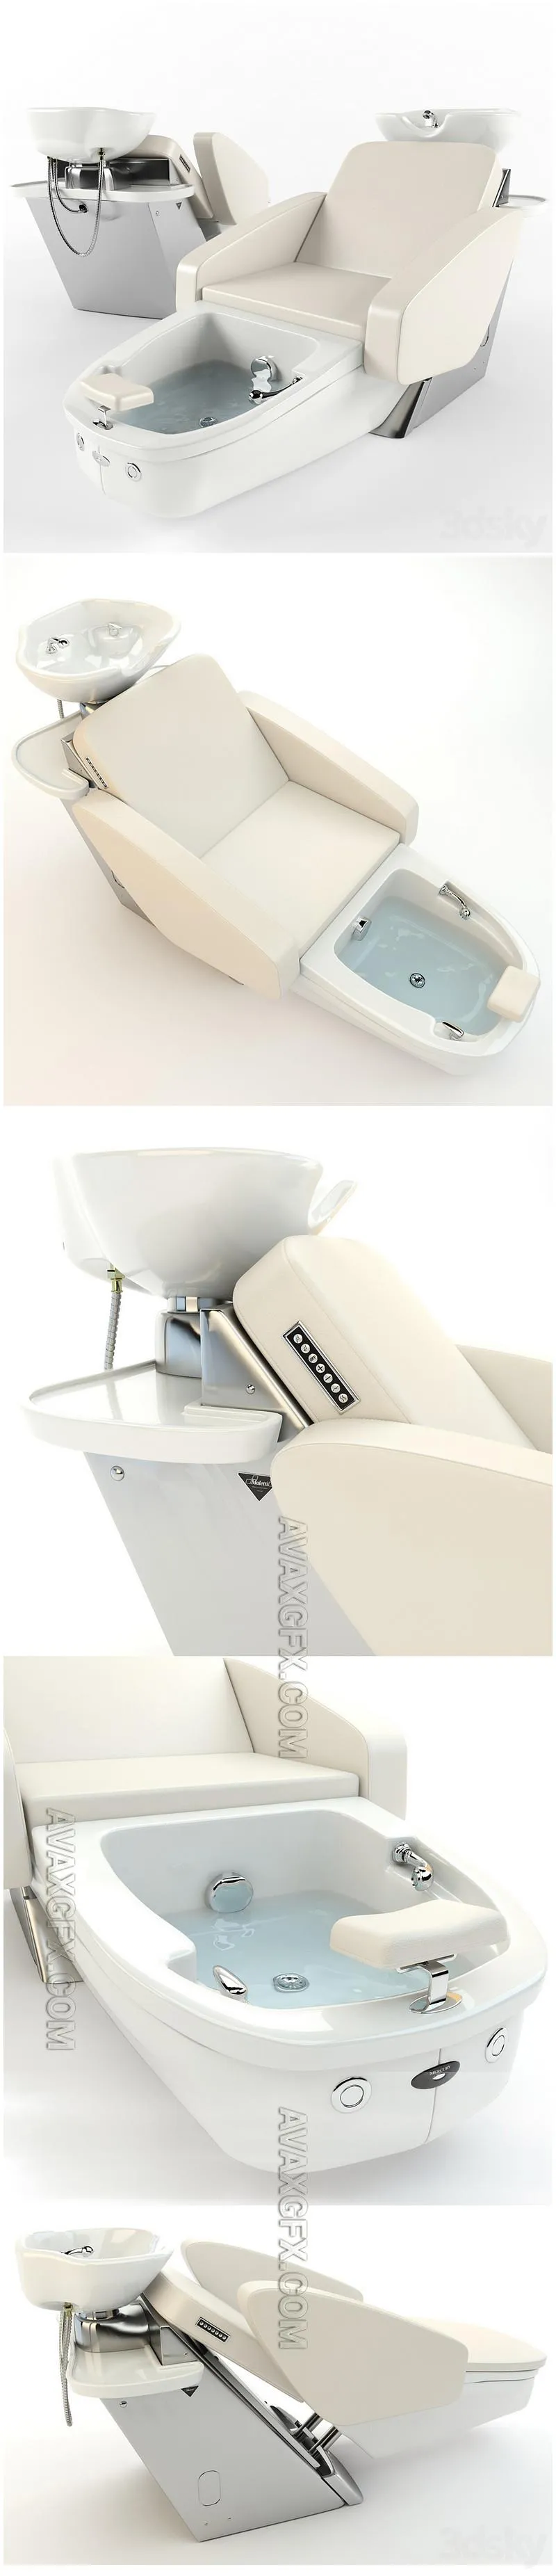 Maletti Mercury Air Massage wash unit with pedicure bowl - 3D Model